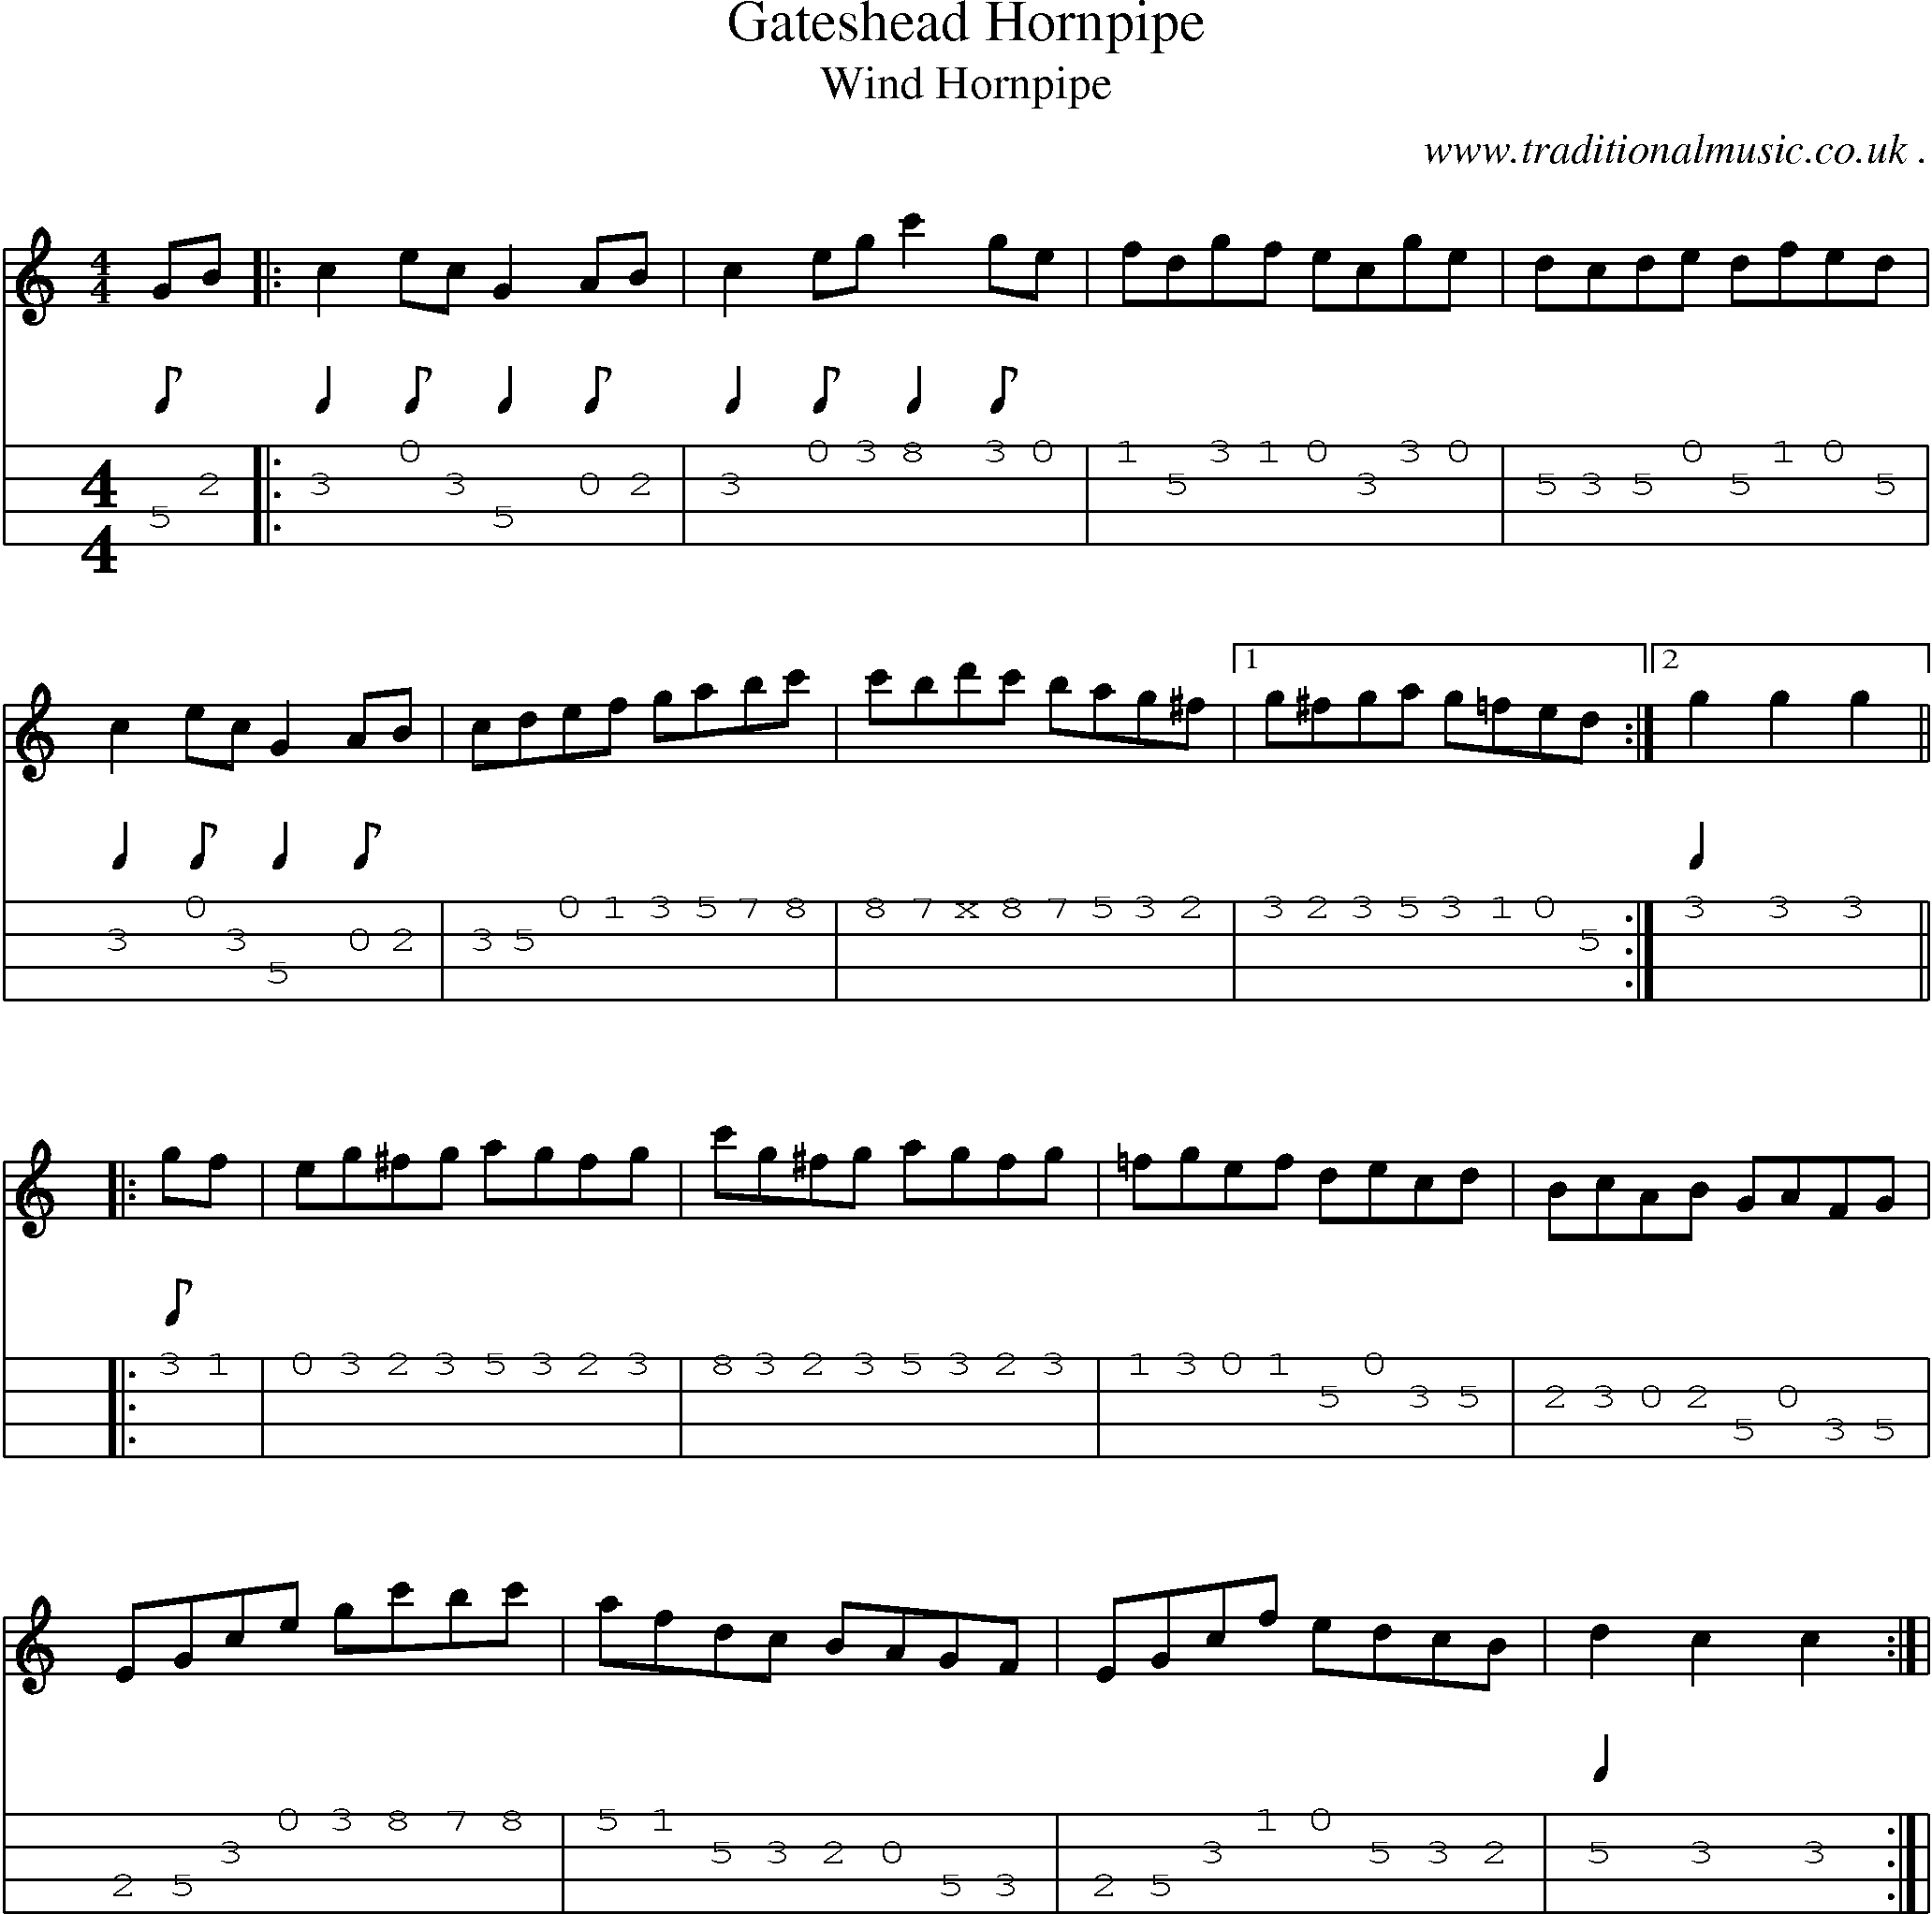 Sheet-Music and Mandolin Tabs for Gateshead Hornpipe